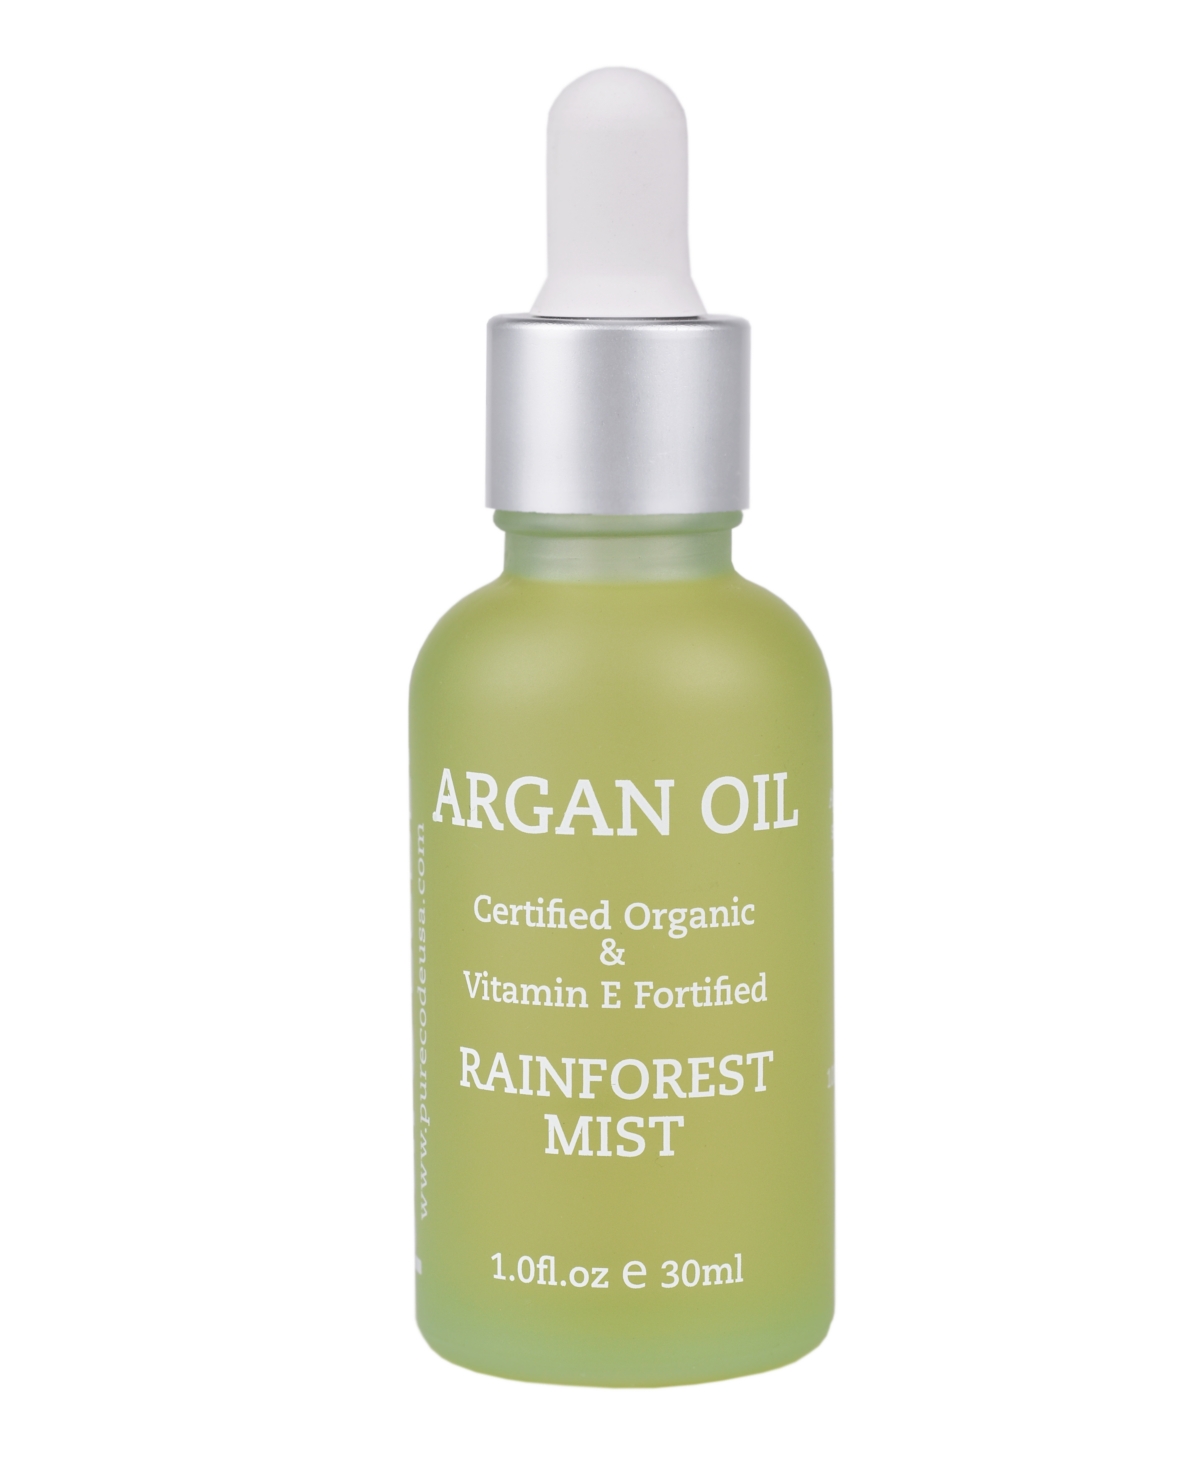 Argan Oil Rainforest Mist, 30 ml - Clear